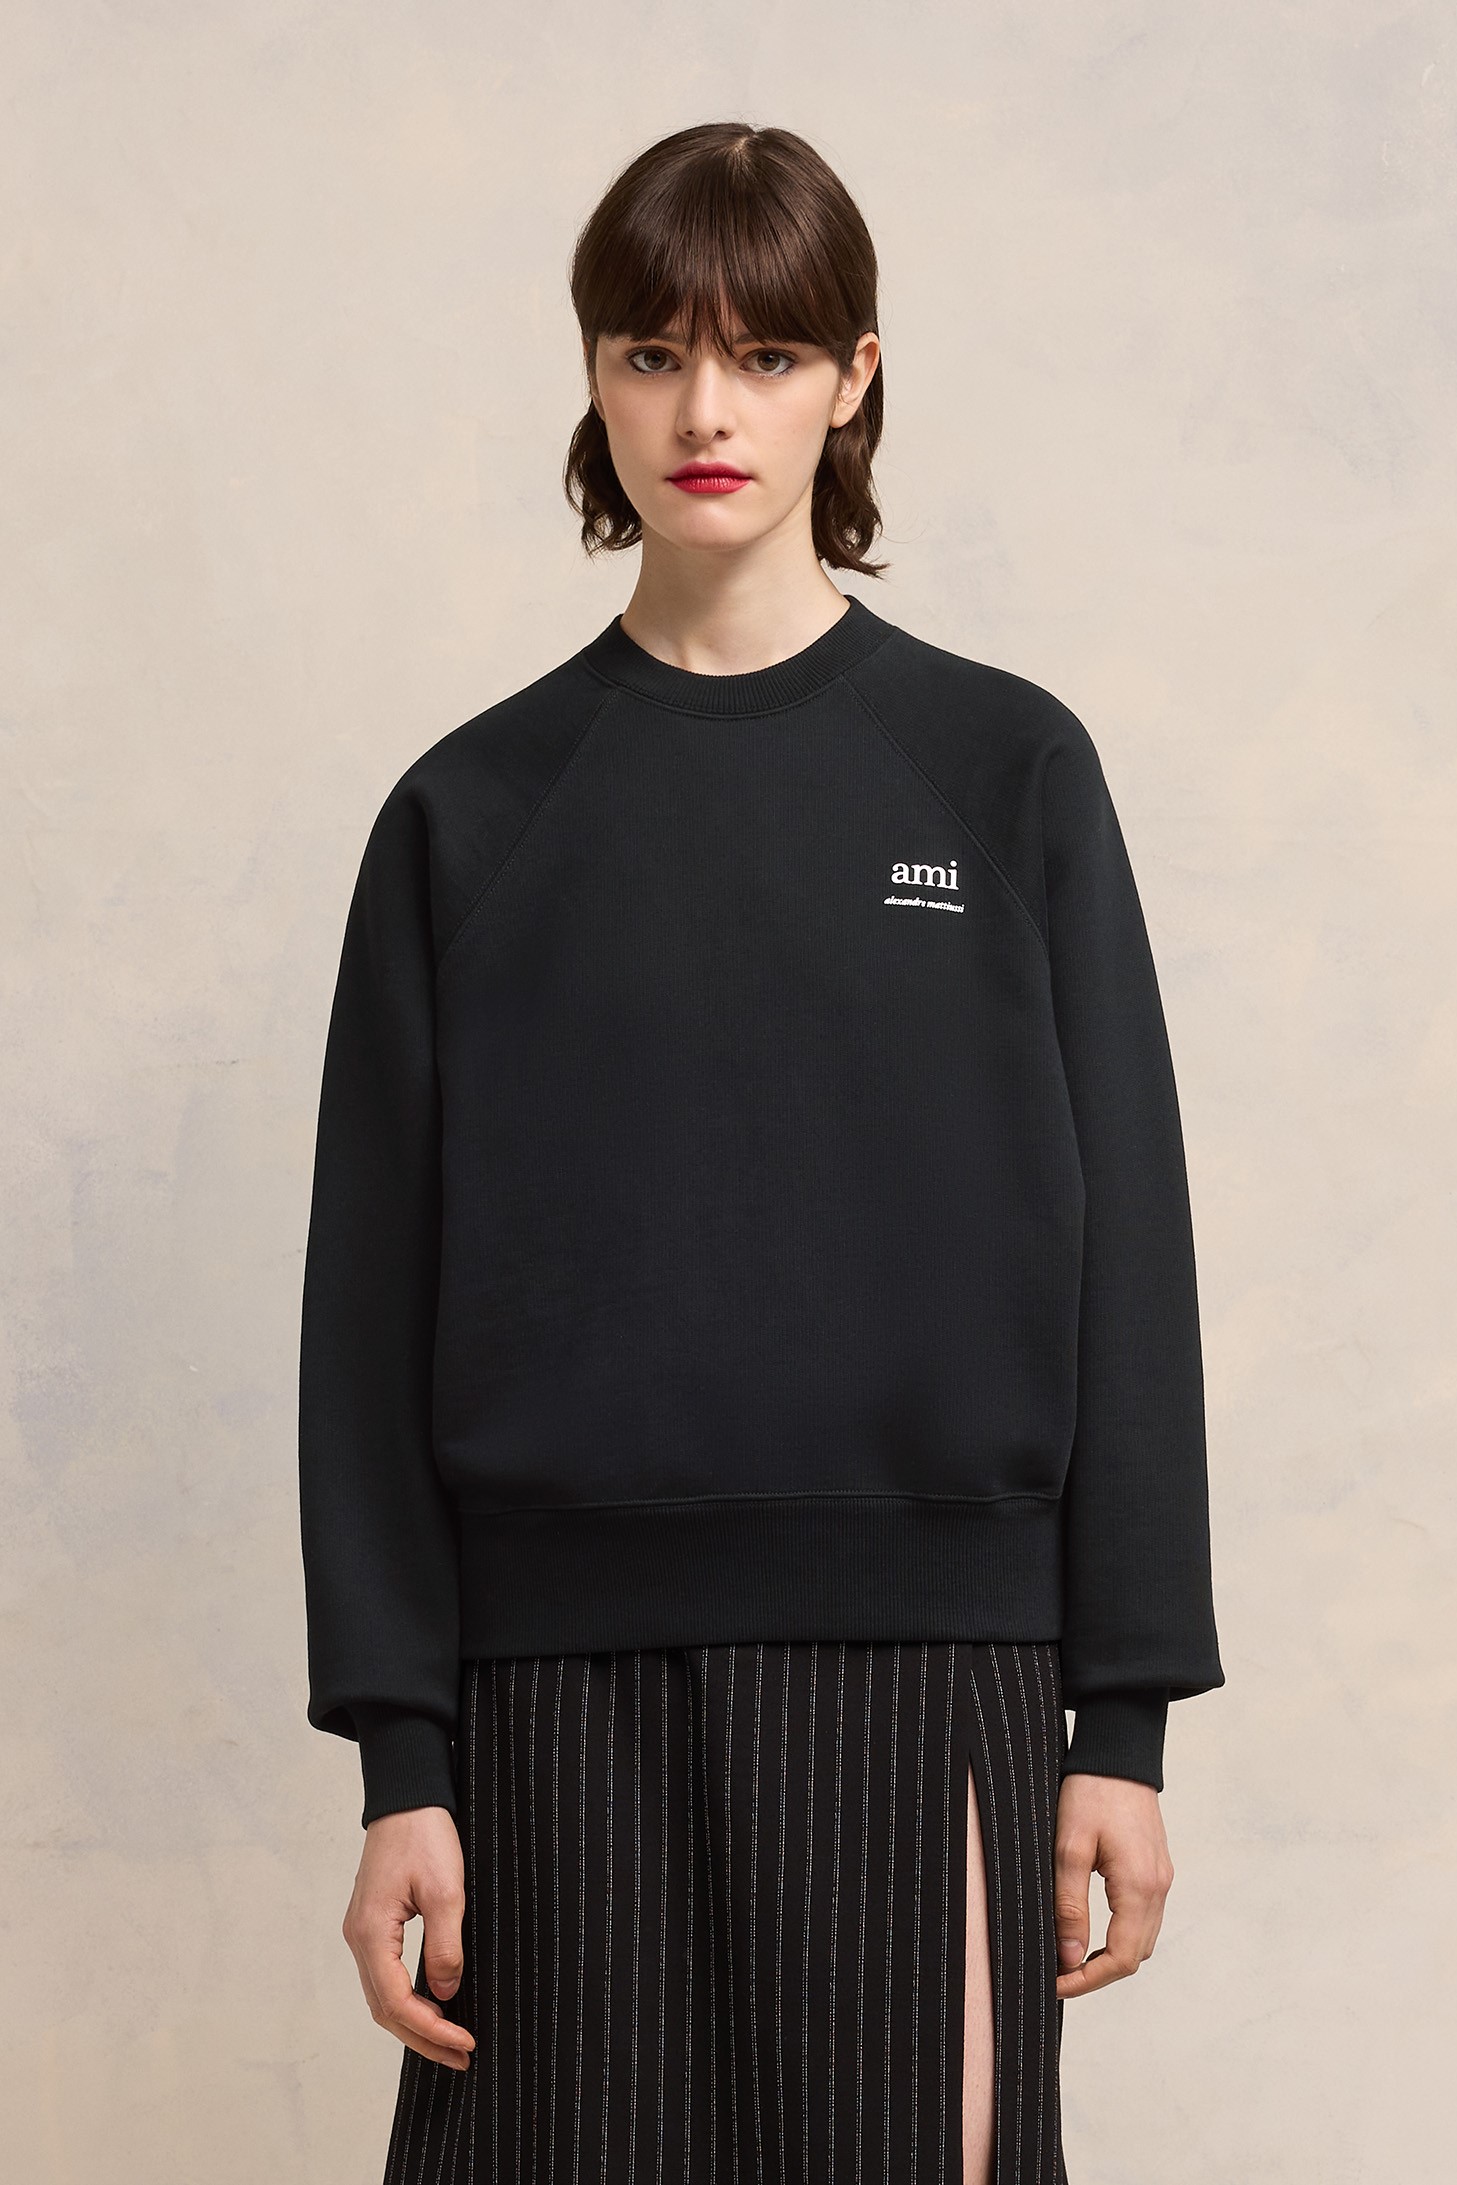 AMI PARIS Alexandre Mattiussi Sweatshirt in Black